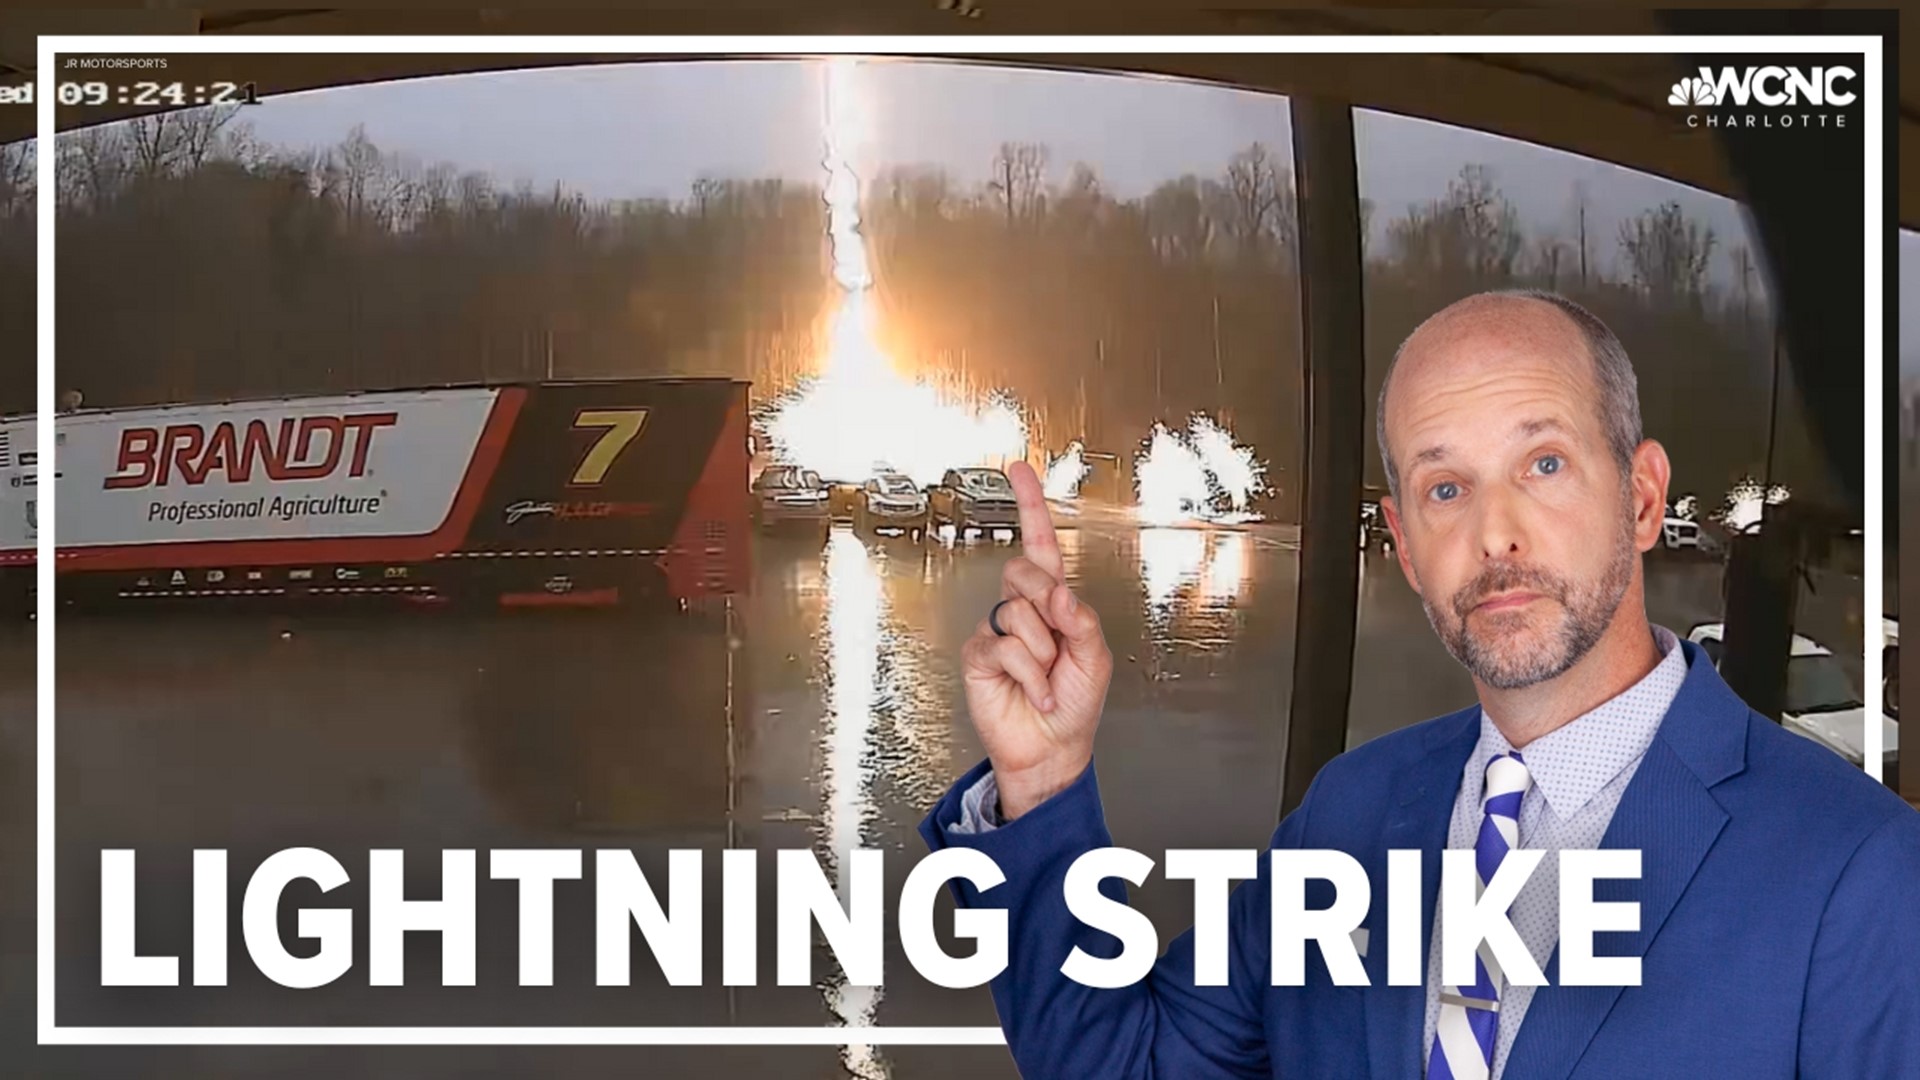 "Sparks were flying this morning" after lightning struck a metal fence at JR Motorsports in Mooresville, North Carolina Wednesday.